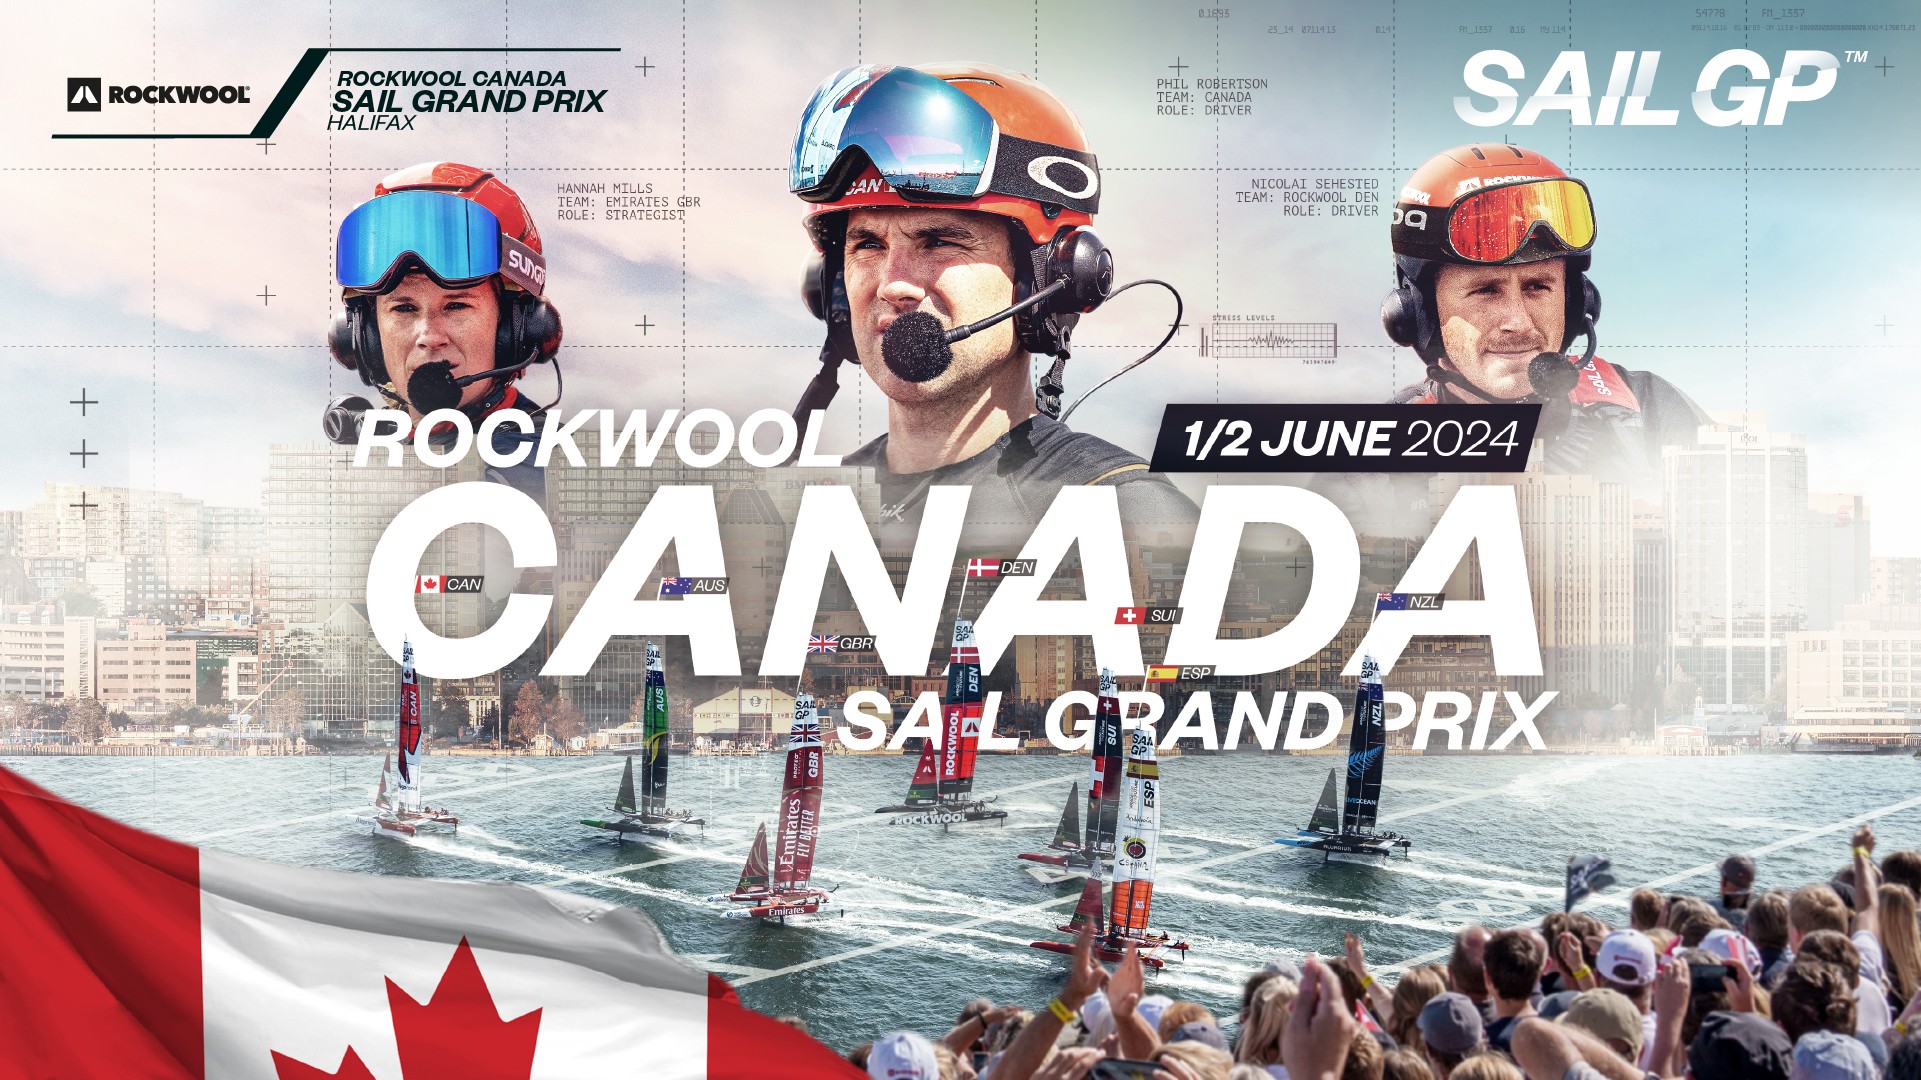 Halifax to host Rockwool Canada Sail Grand Prix